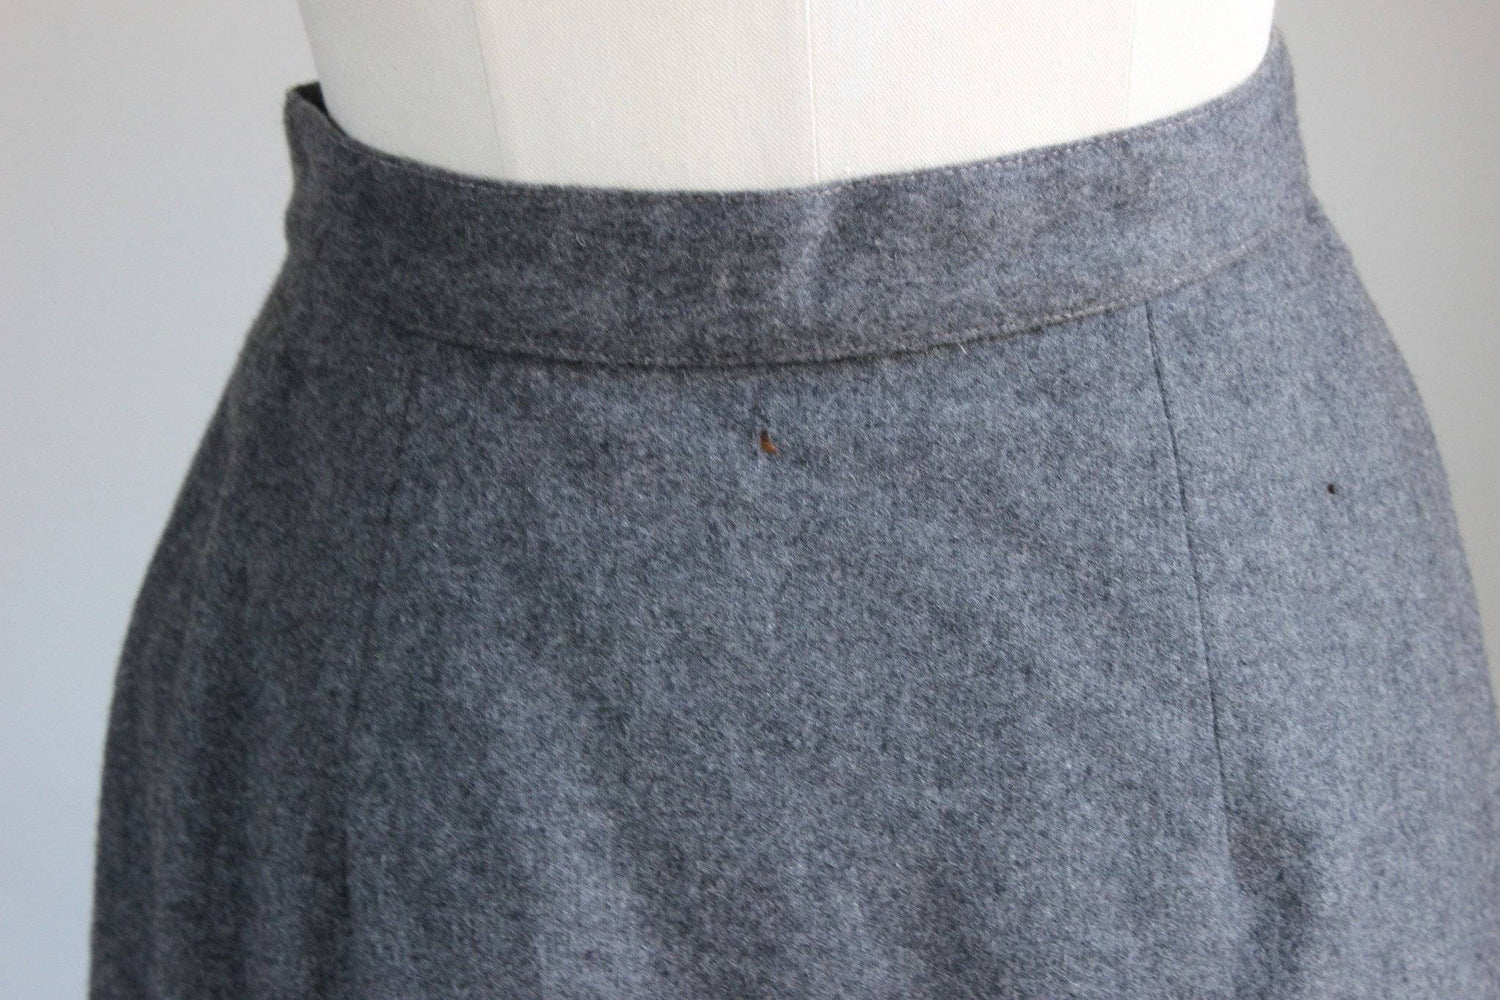 Vintage 1970s Grey Wool Skirt by Evan Picone-Toadstool Farm Vintage-1970s Skirt,70s,A Line,Evan Picone,Gray Skirt,Grey Wool,Vintage,Vintage Clothing,Vintage Day Wear,Work Wear